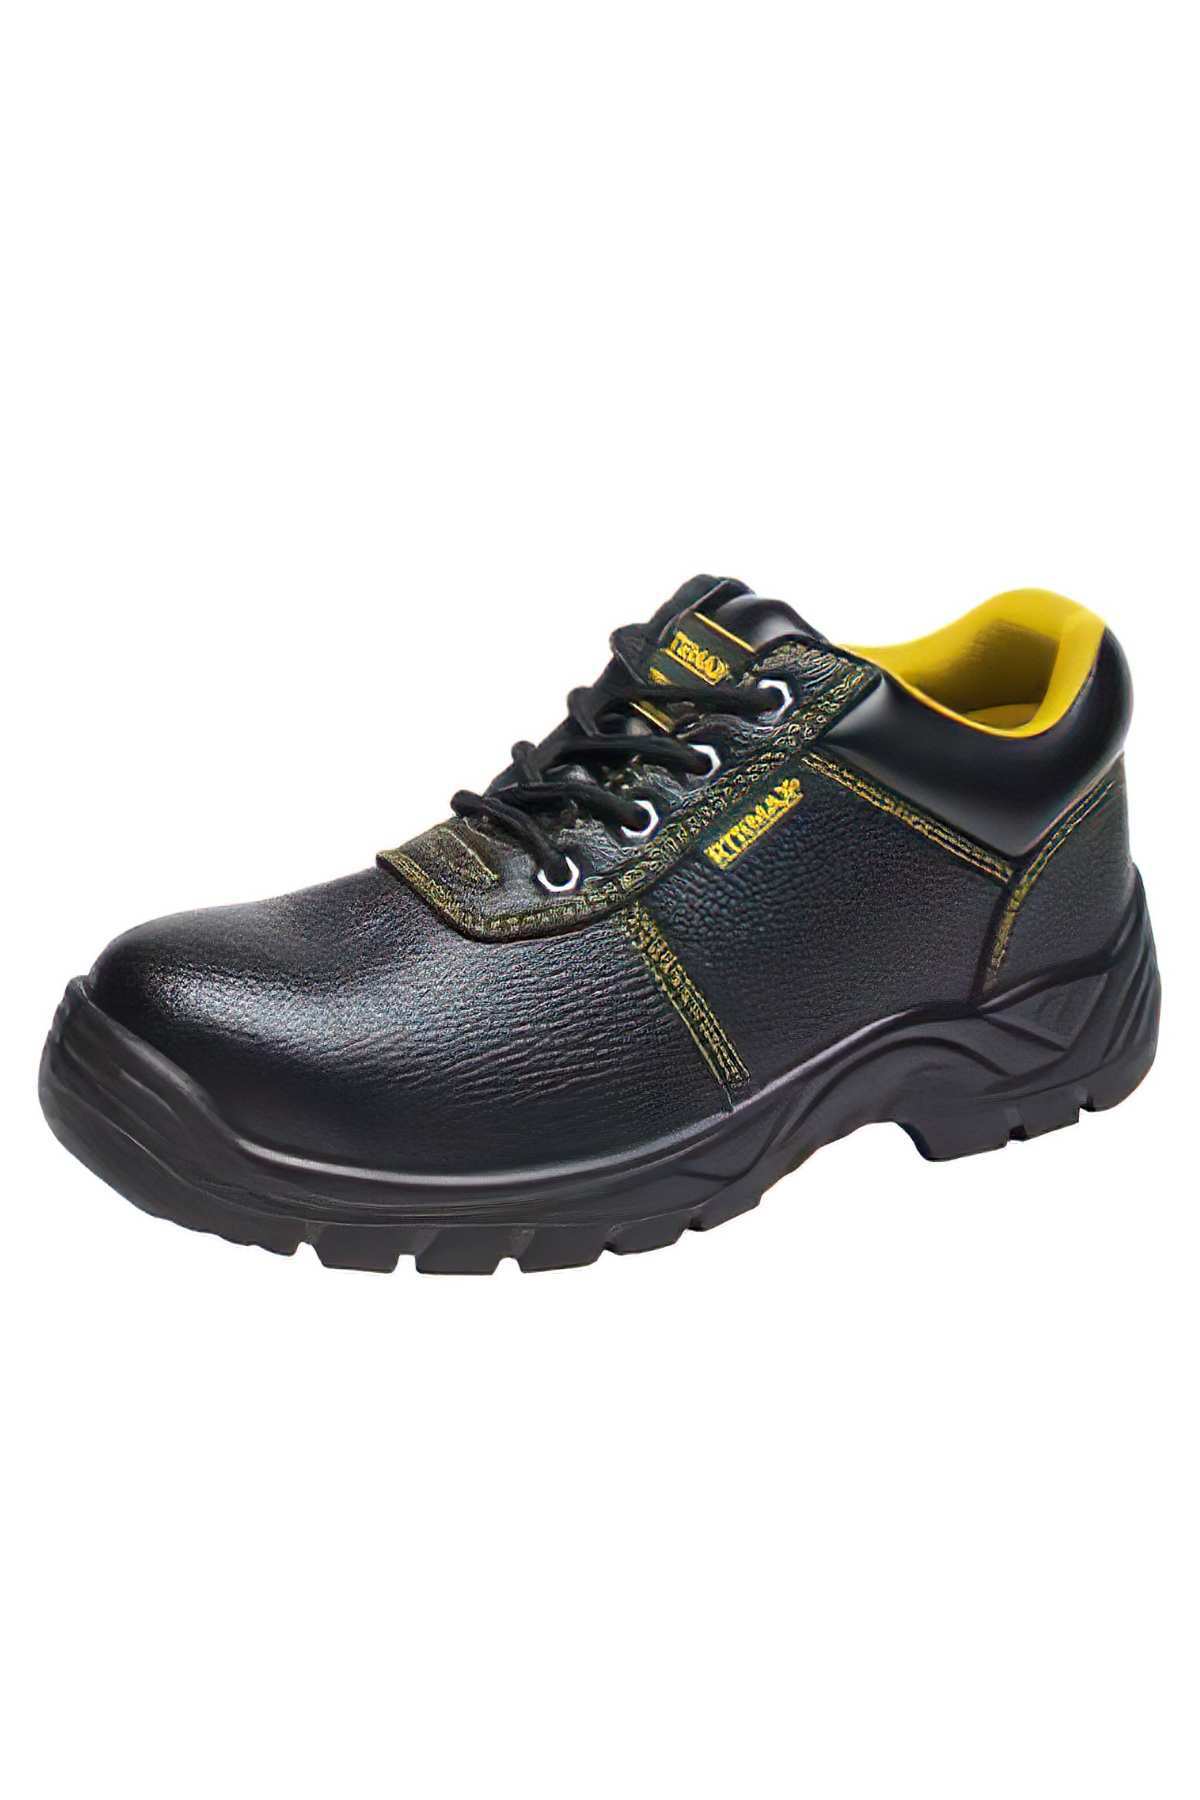 RTRMAX RHS2646 Güvenlik Ayakkabısı